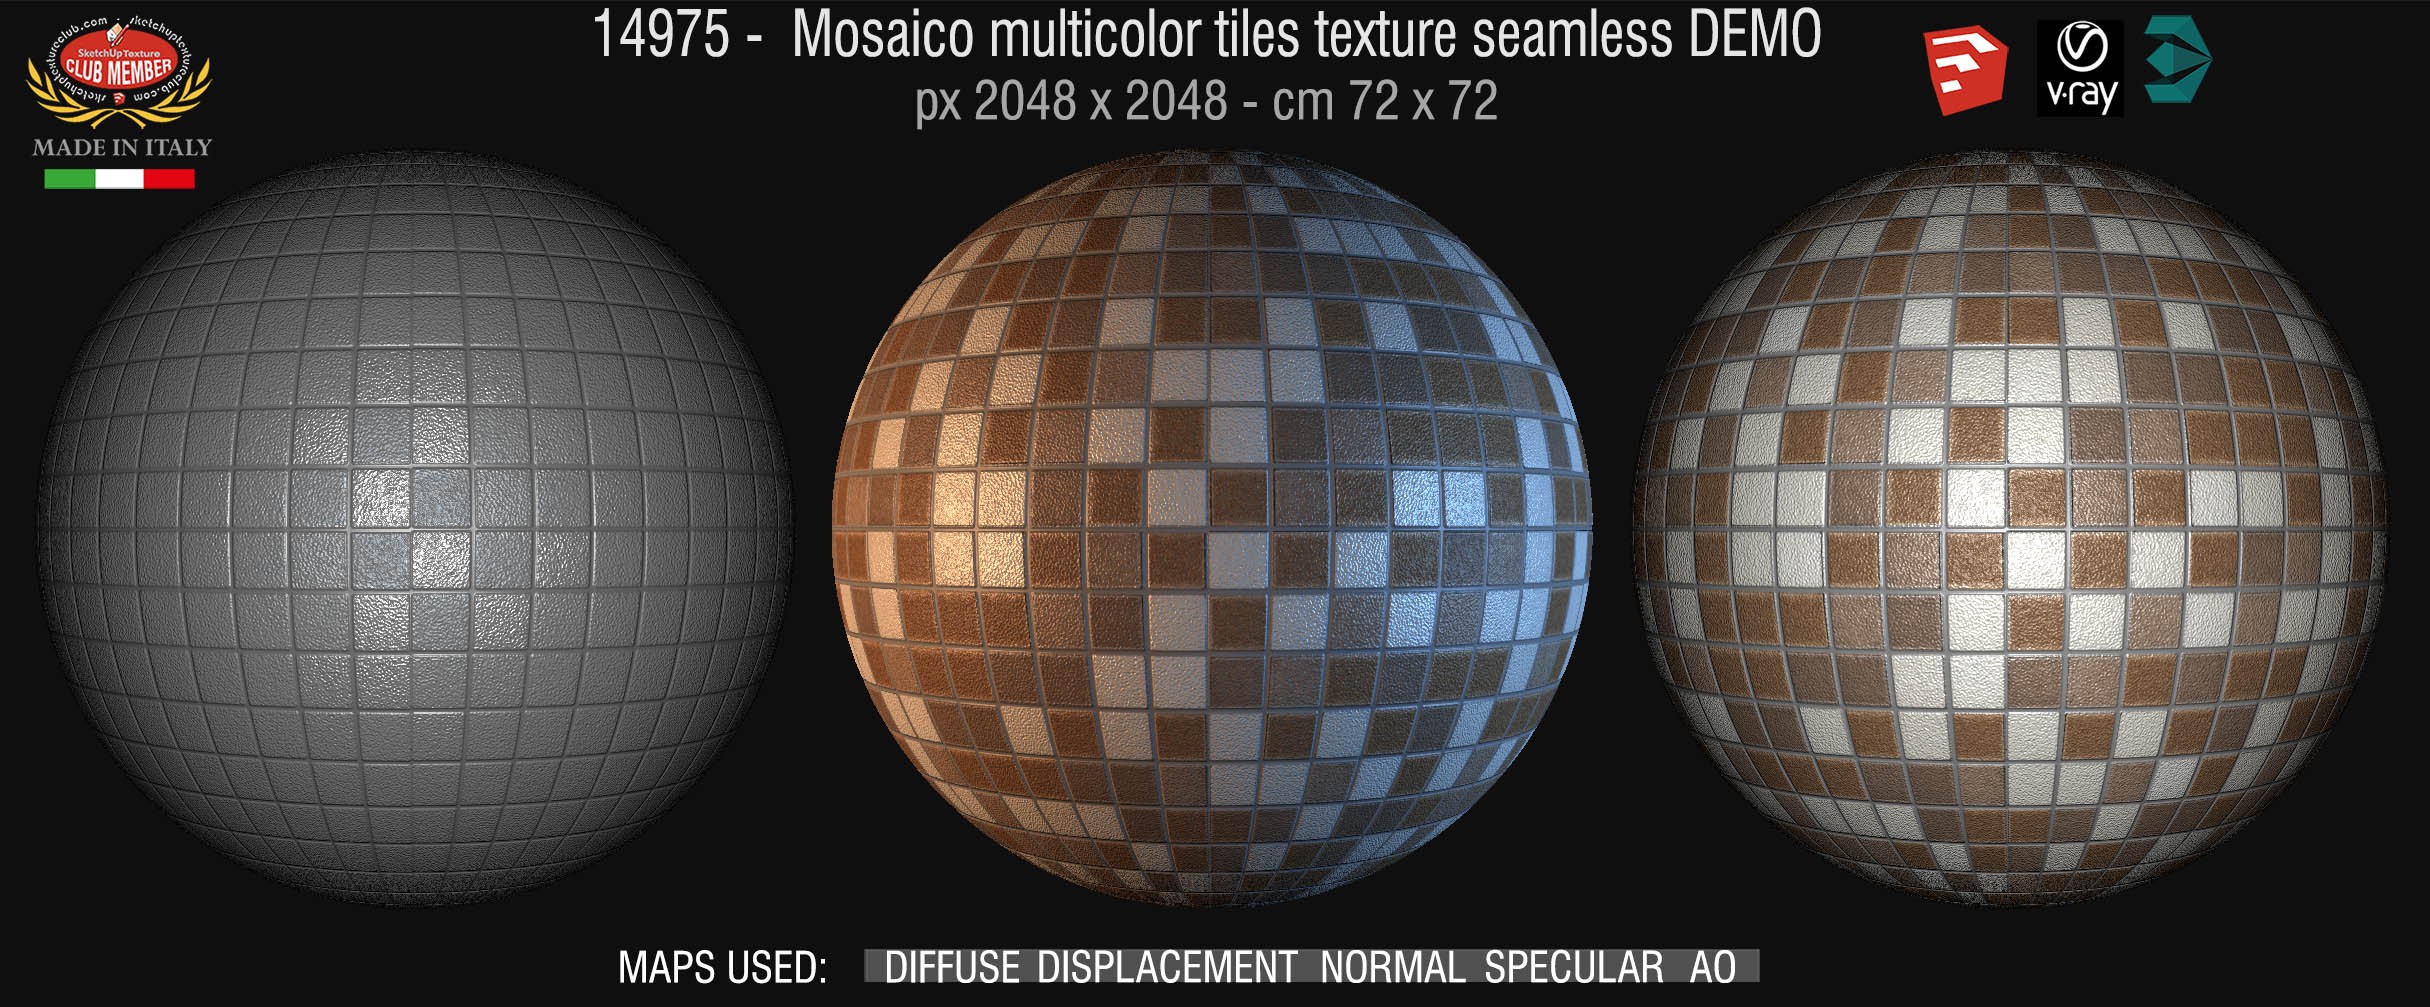 14975 Mosaico multicolor tiles texture seamless + maps DEMO